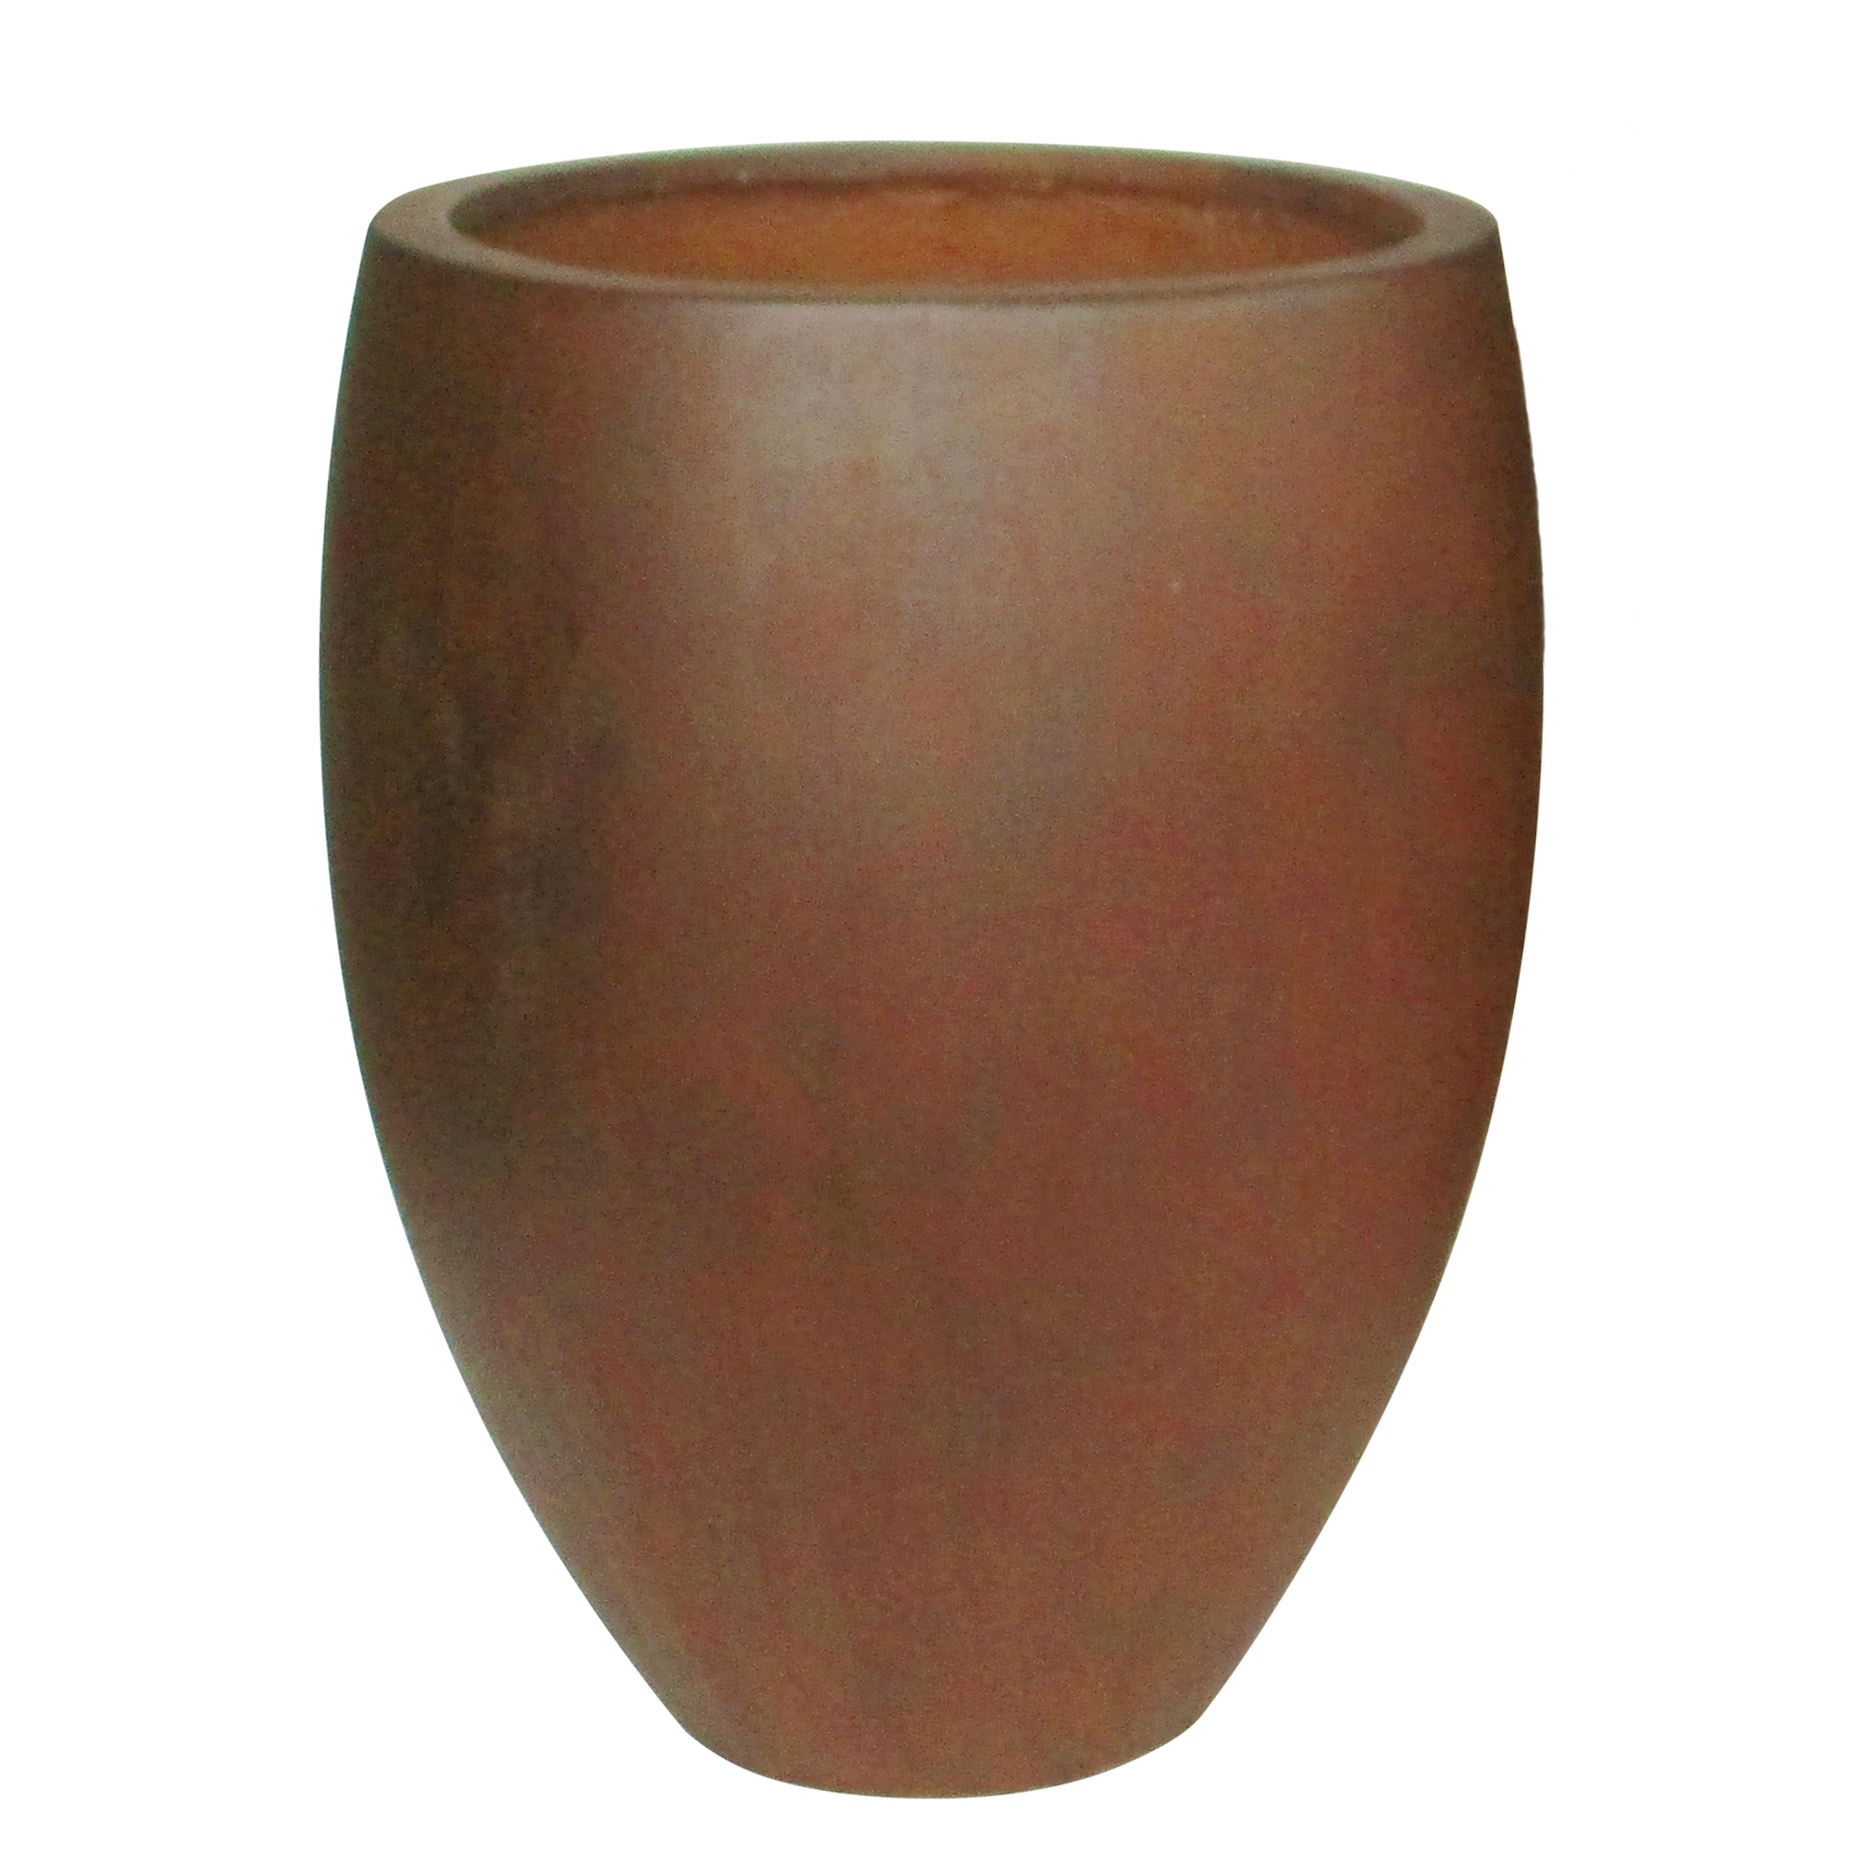 Potte cone rust ficonstone rødbrun Ø48xH62cm